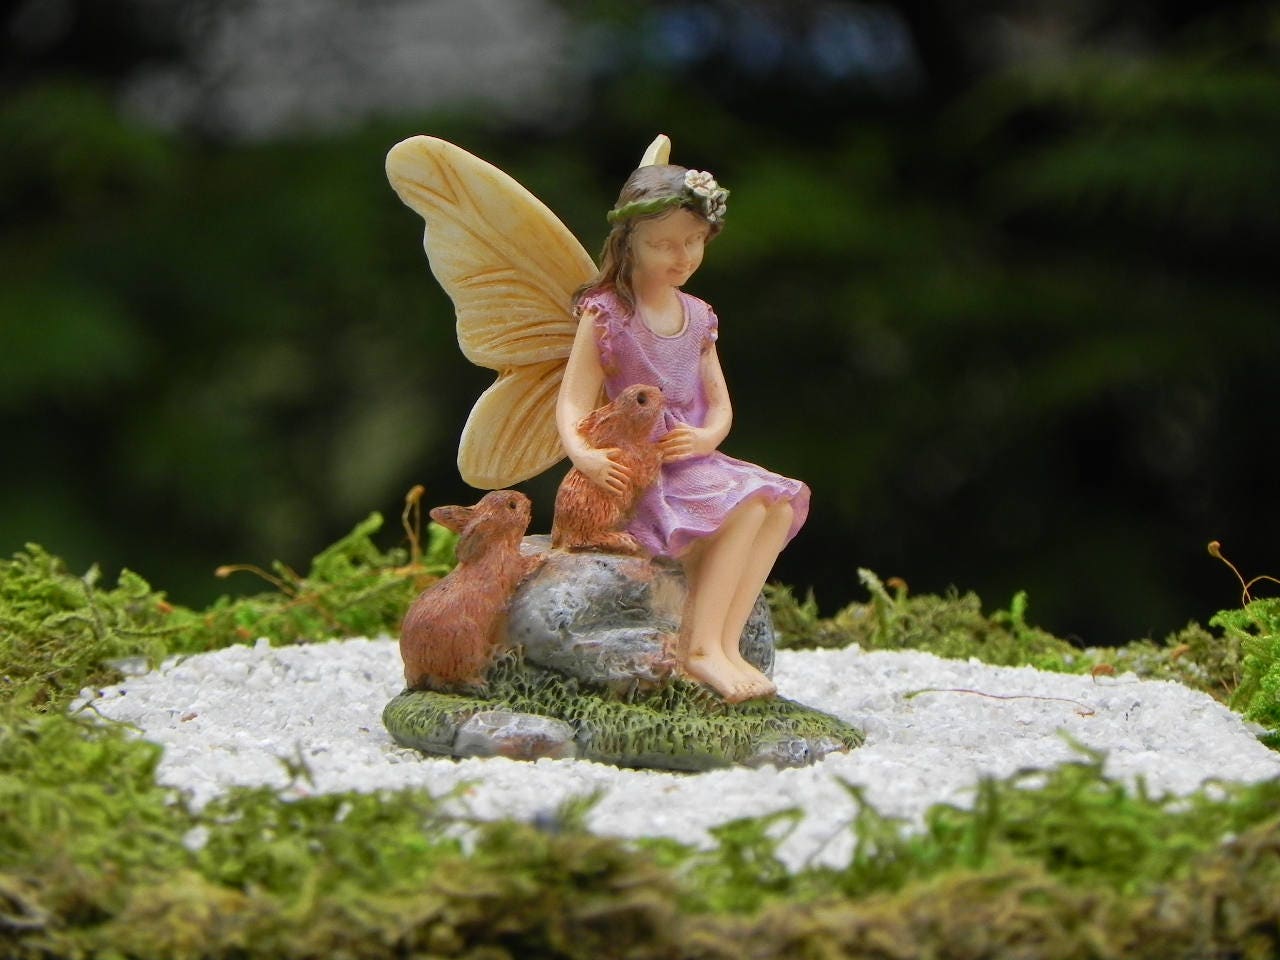 Artificial Moss Stones for Fairy Garden 2 SIZES Miniature Garden